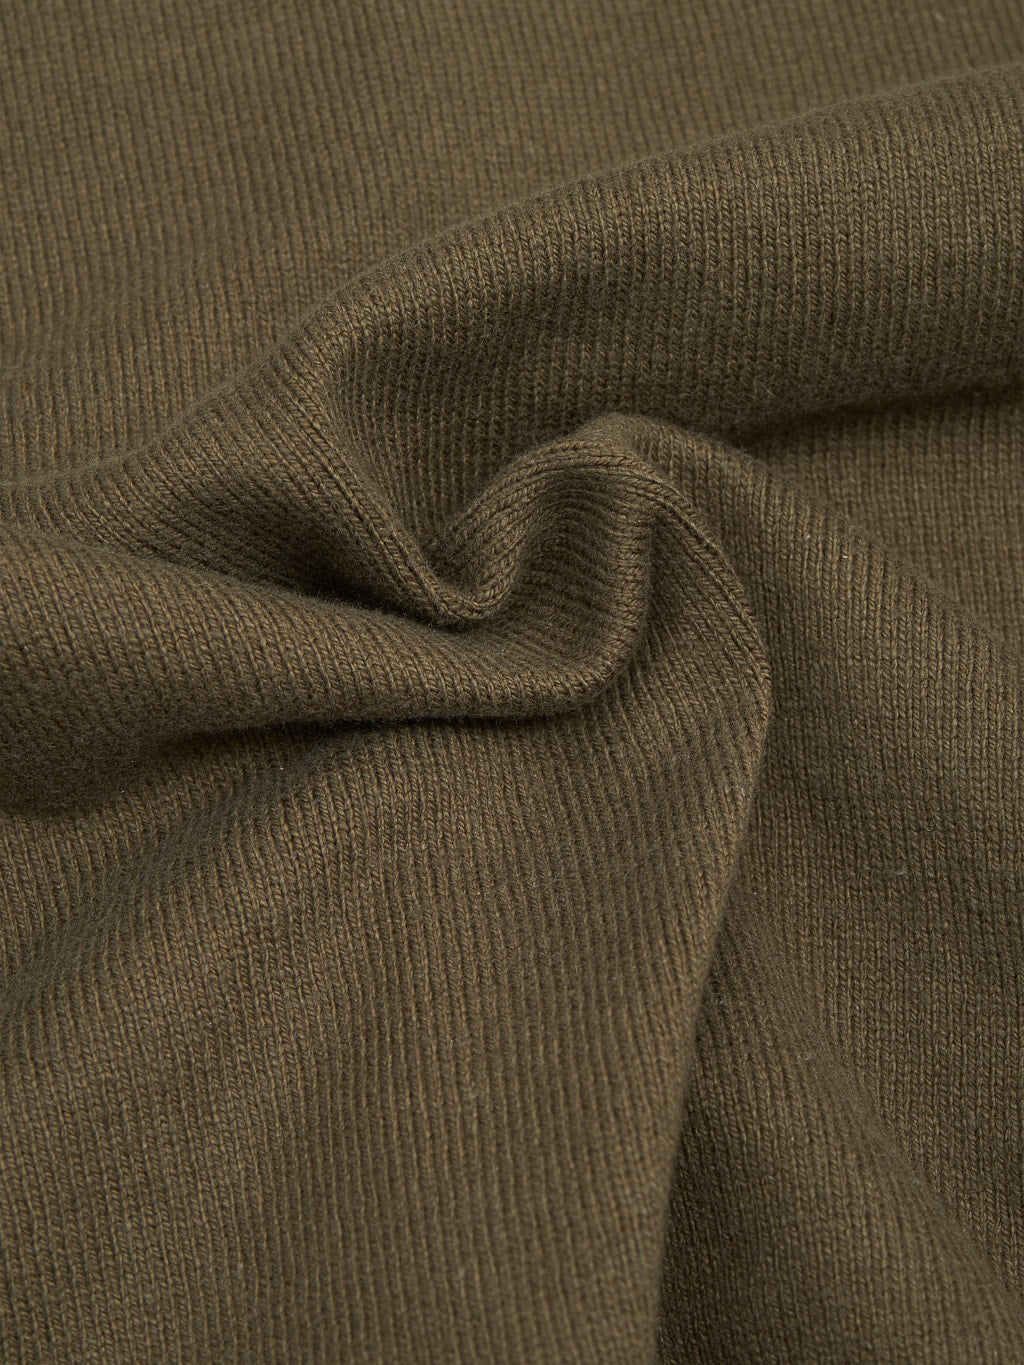 wonder looper crewneck Tshirt Double Heavyweight khaki green fabric texture